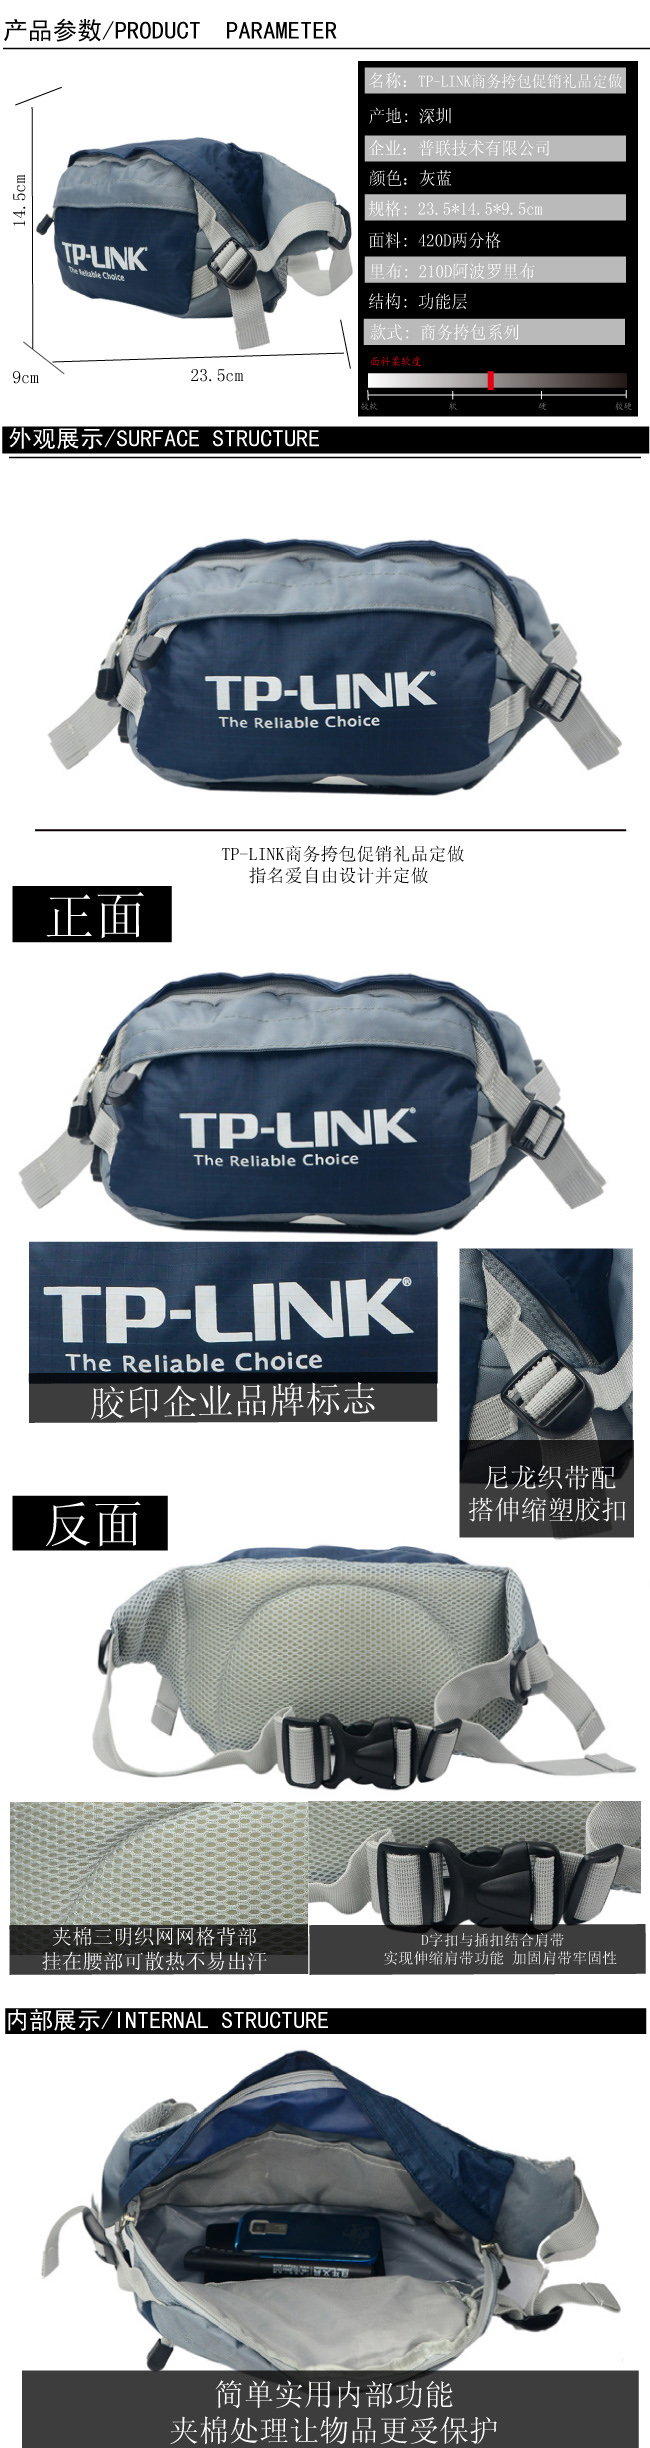 TP-LINK促销商务腰包礼品定制